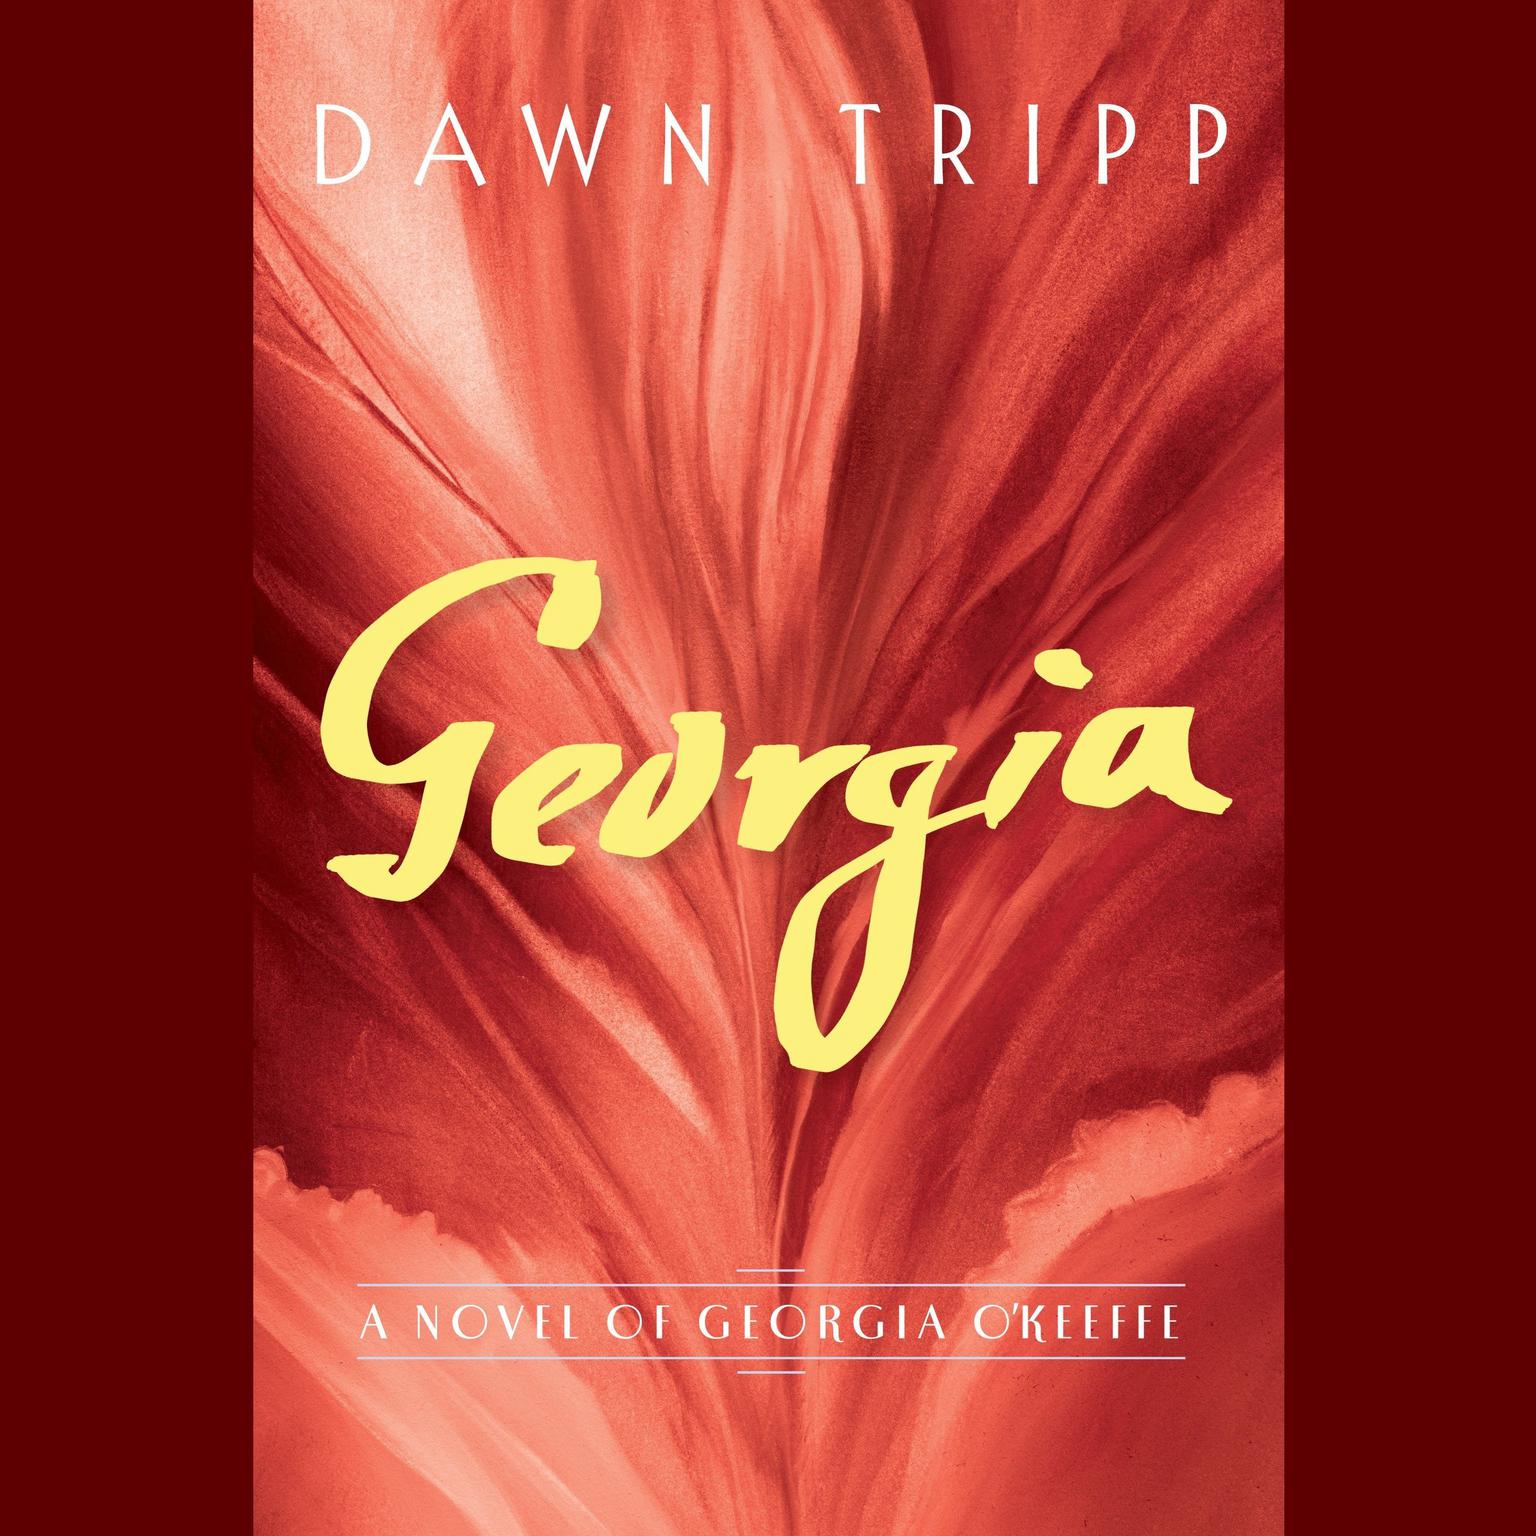 Georgia: A Novel of Georgia OKeeffe Audiobook, by Dawn Tripp